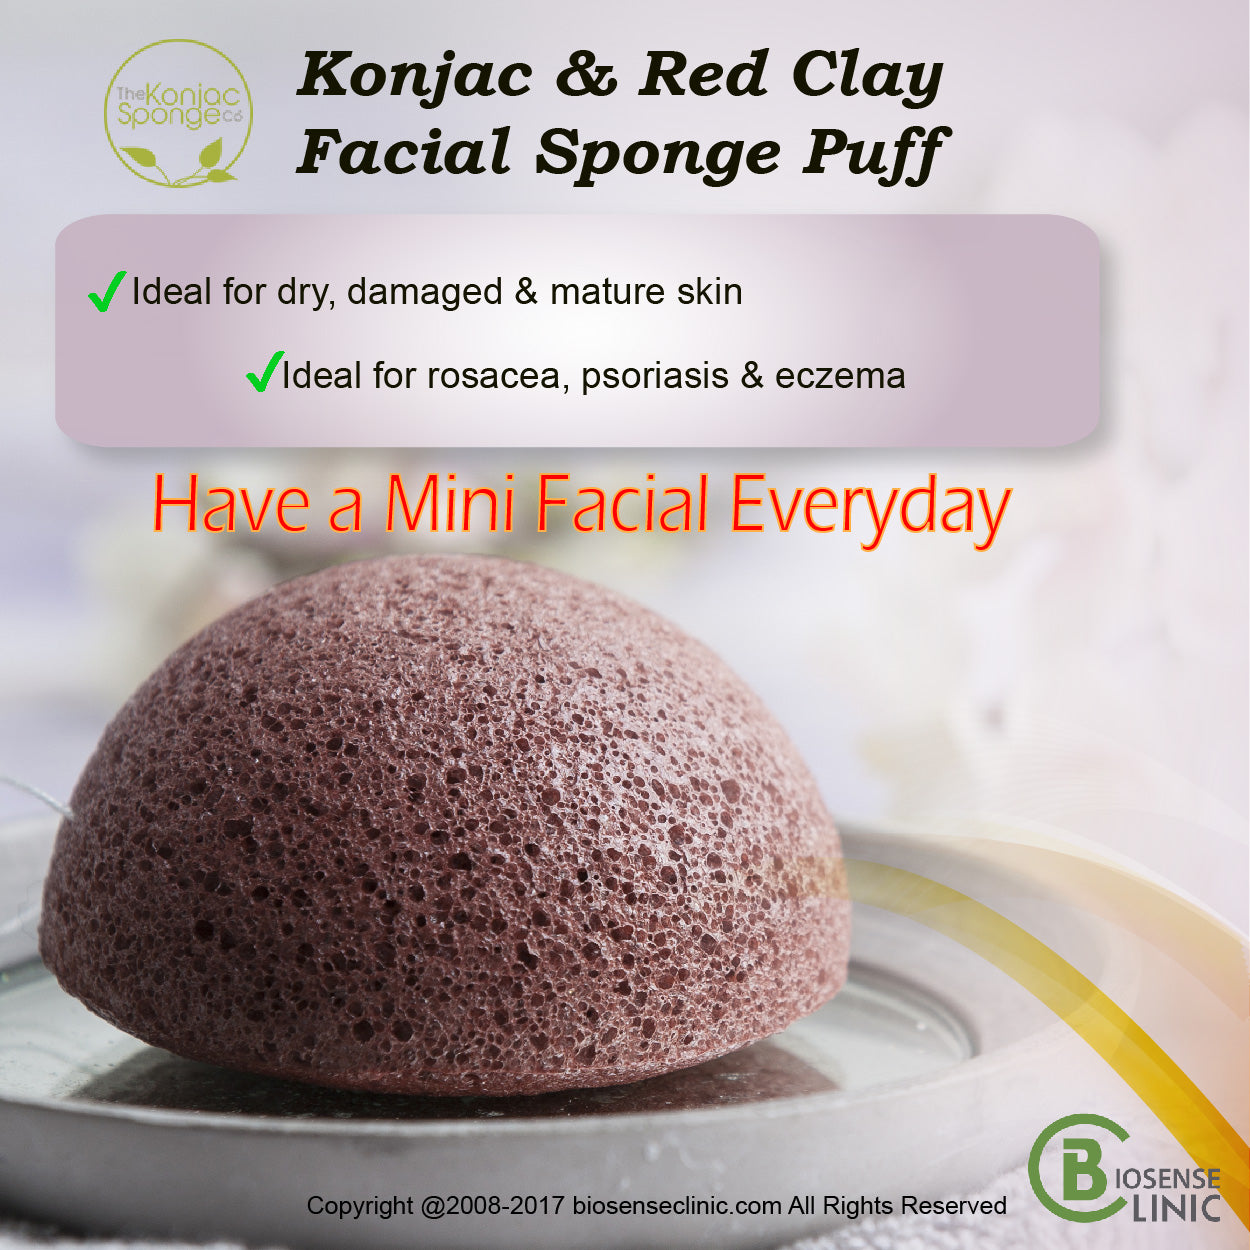 Konjac & Red Clay Facial Sponge Puff mobile banner